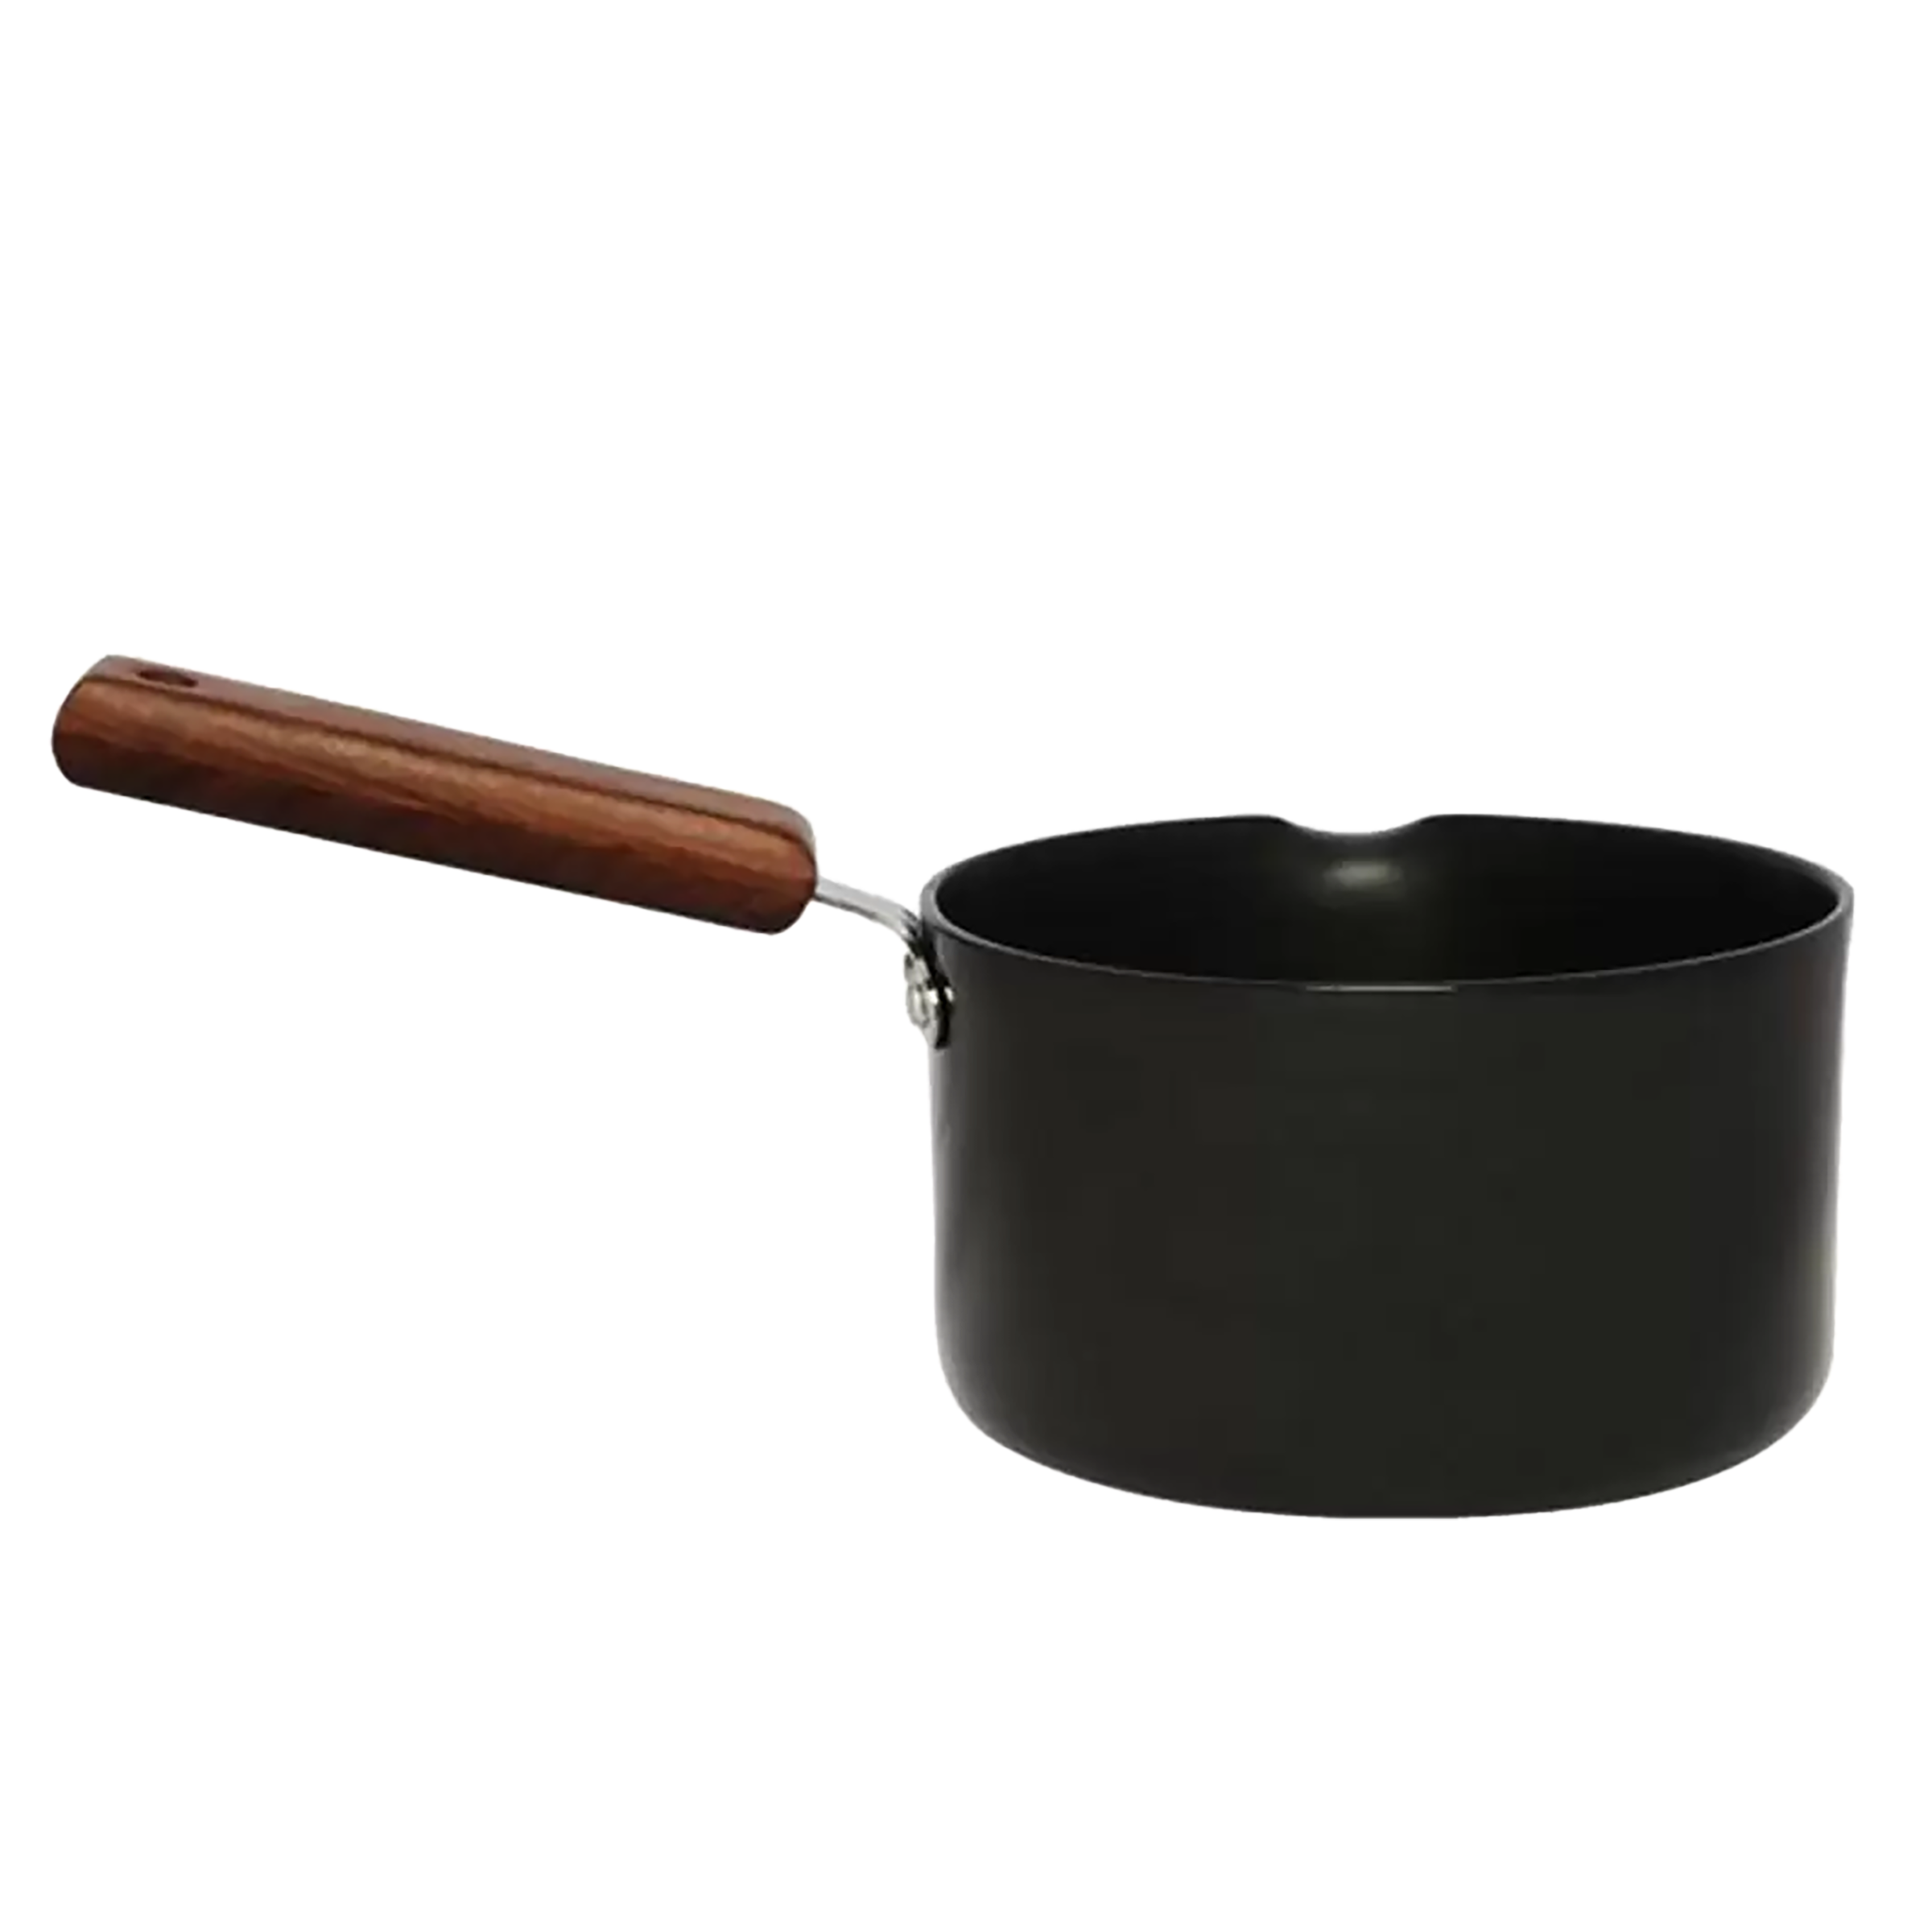 Wonderchef Ebony Sauce Pan (Hard Anodized Coating, 63152546, Black/Brown)_1